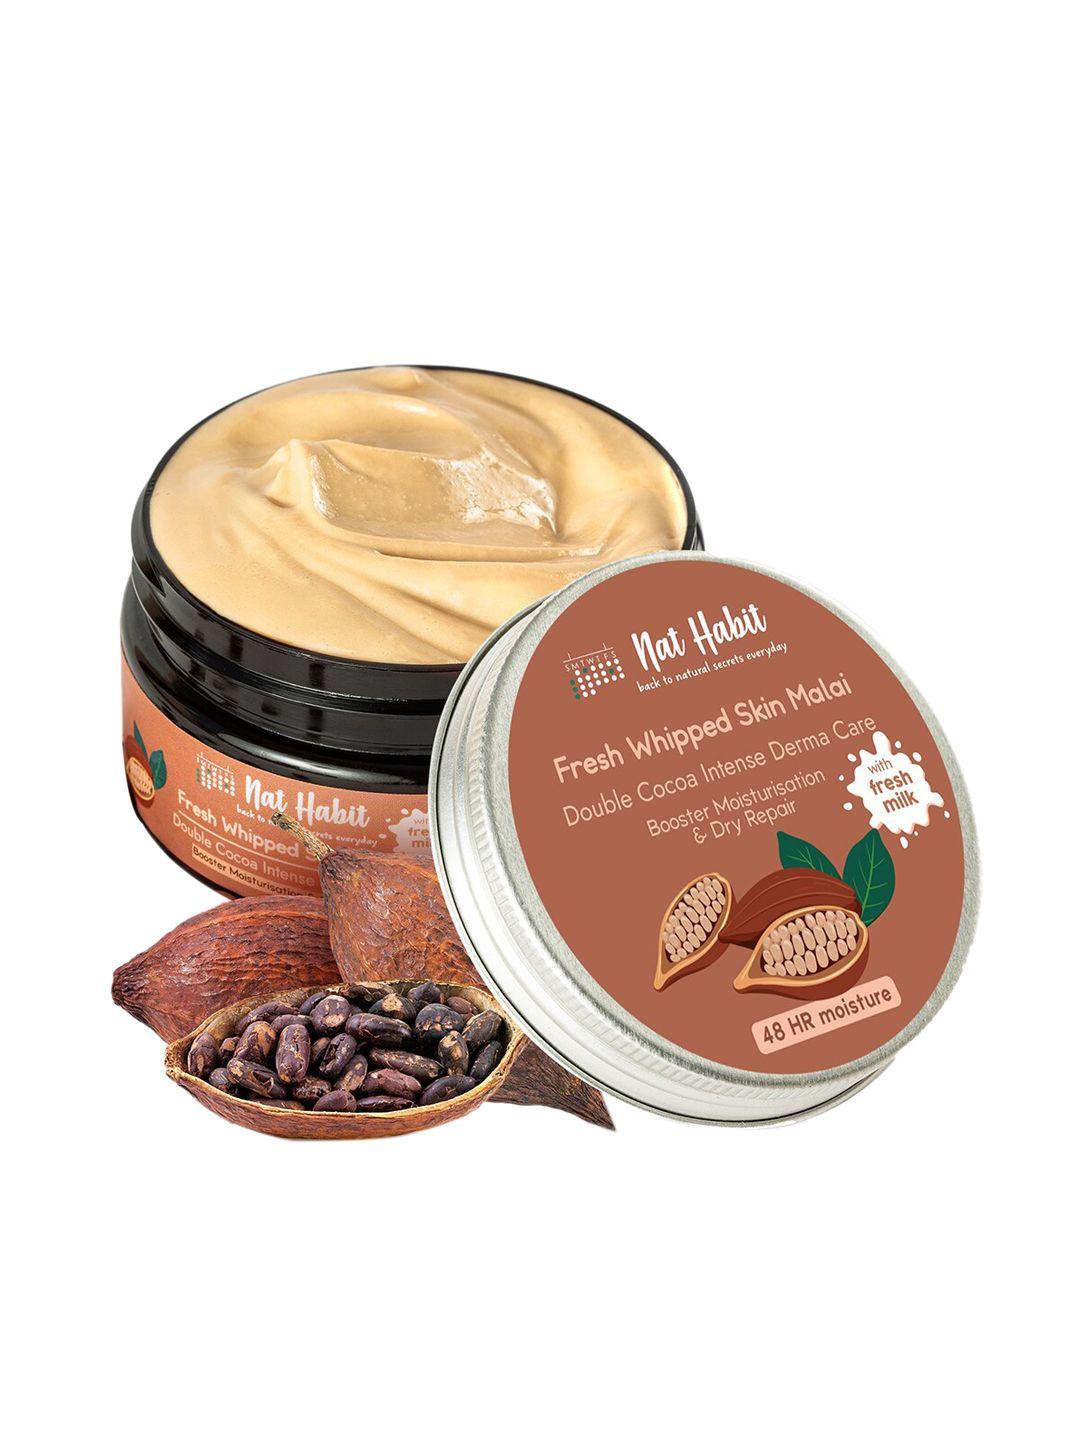 nat habit double cocoa body butter for 48 hr body moisturization intense derma care & dry repair - 120 ml